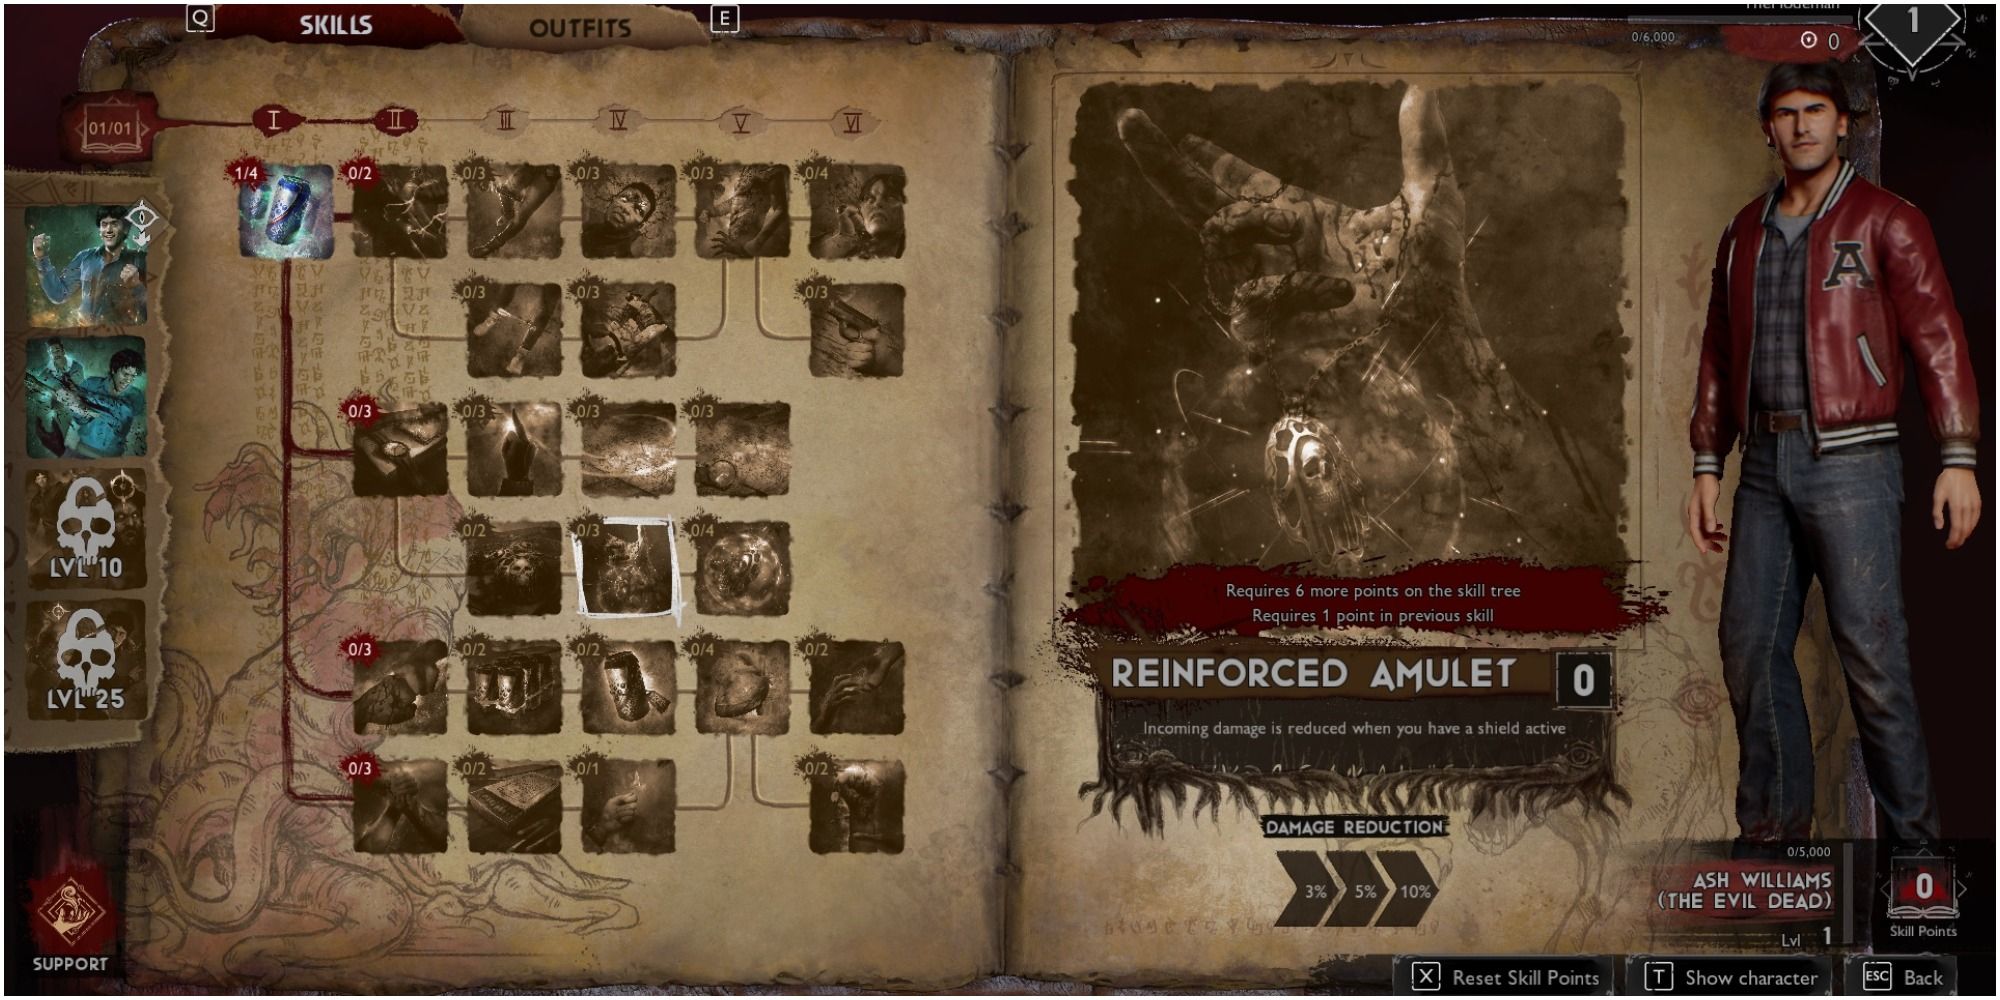 Evil Dead The Game Support Skill Reinforced Amulet Description